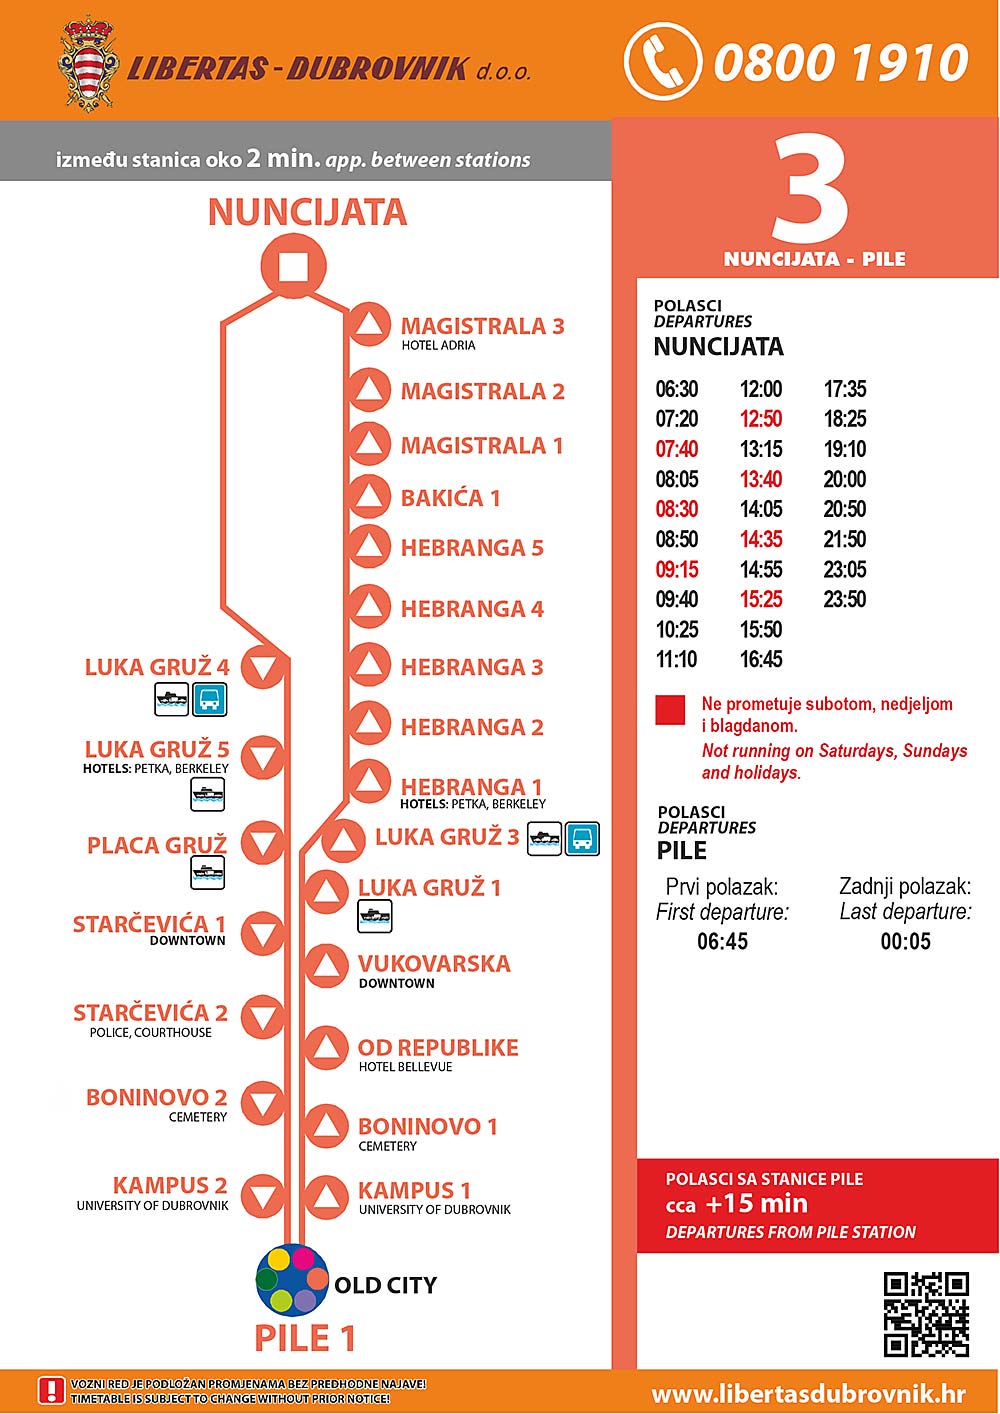 Dubrovnik Bus Line 3: From Nuncijata via Gruž, Boninovo to Pile (Old Town) and back via Vukovarska, Hebranaga and Magistrala